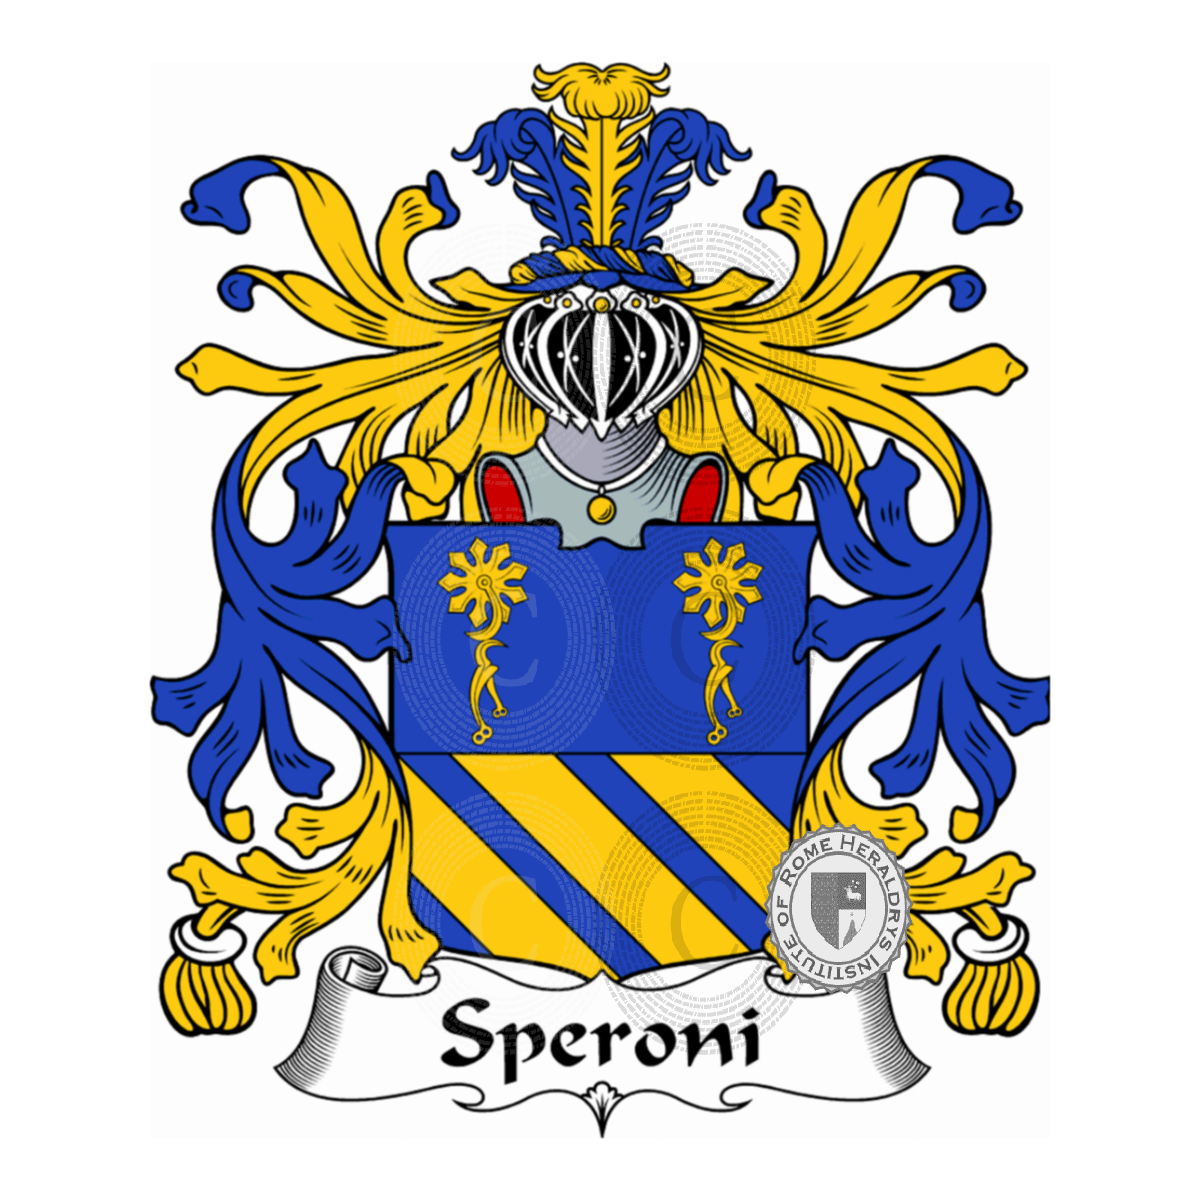 Brasão da famíliaSperoni, Speroniero